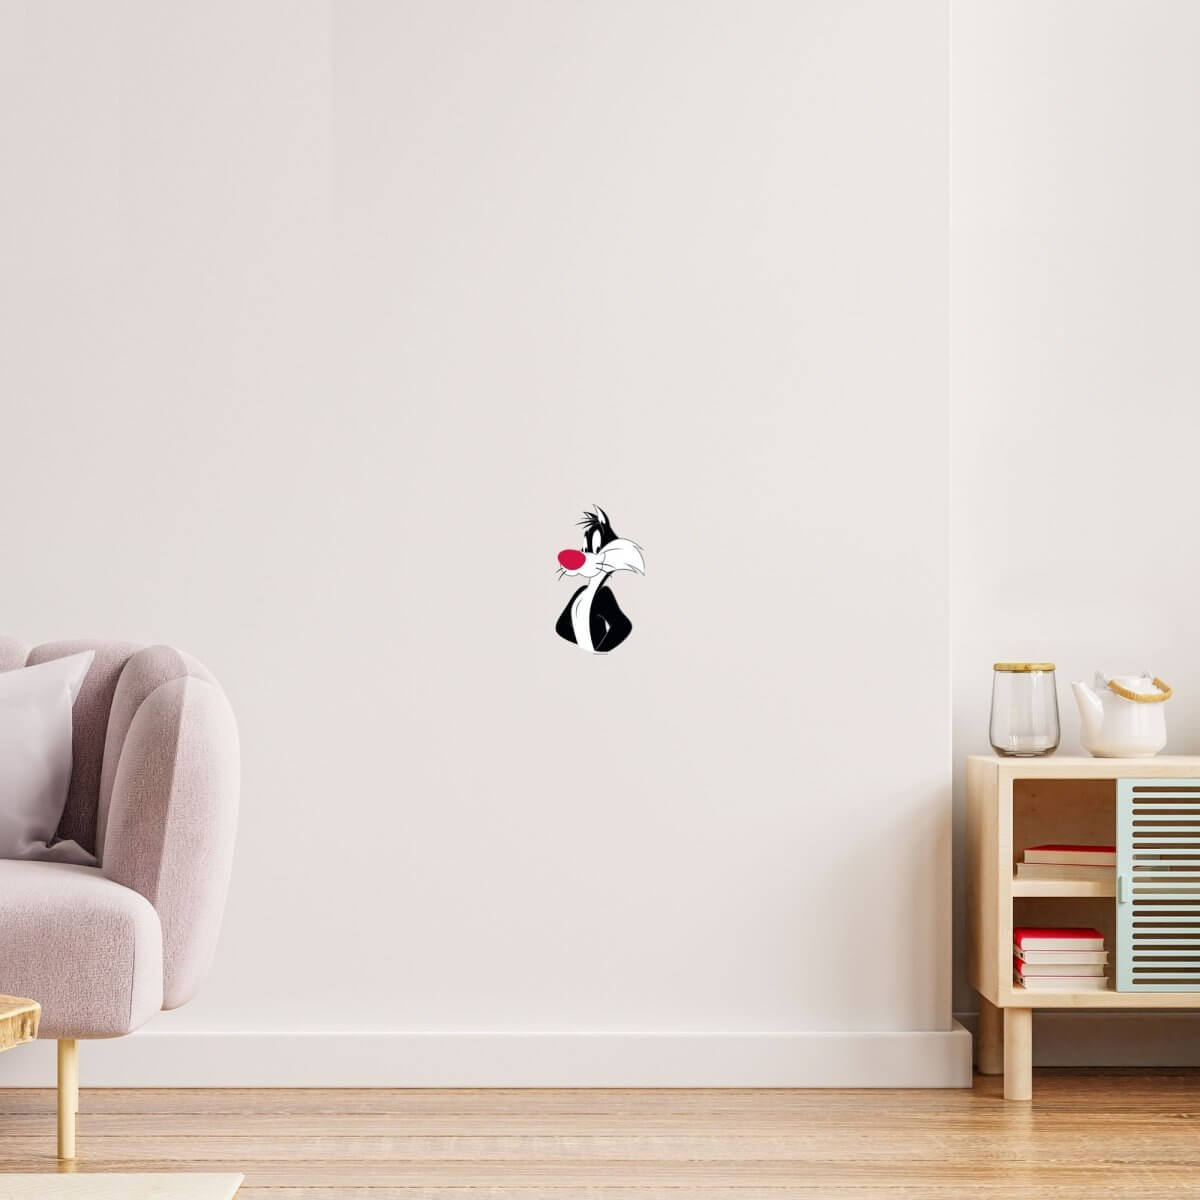 Kismet Decals Looney Tunes Sylvester Potrait Licensed Wall Sticker - Easy DIY Home & Kids Room Decor Wall Decal Art - Kismet Decals